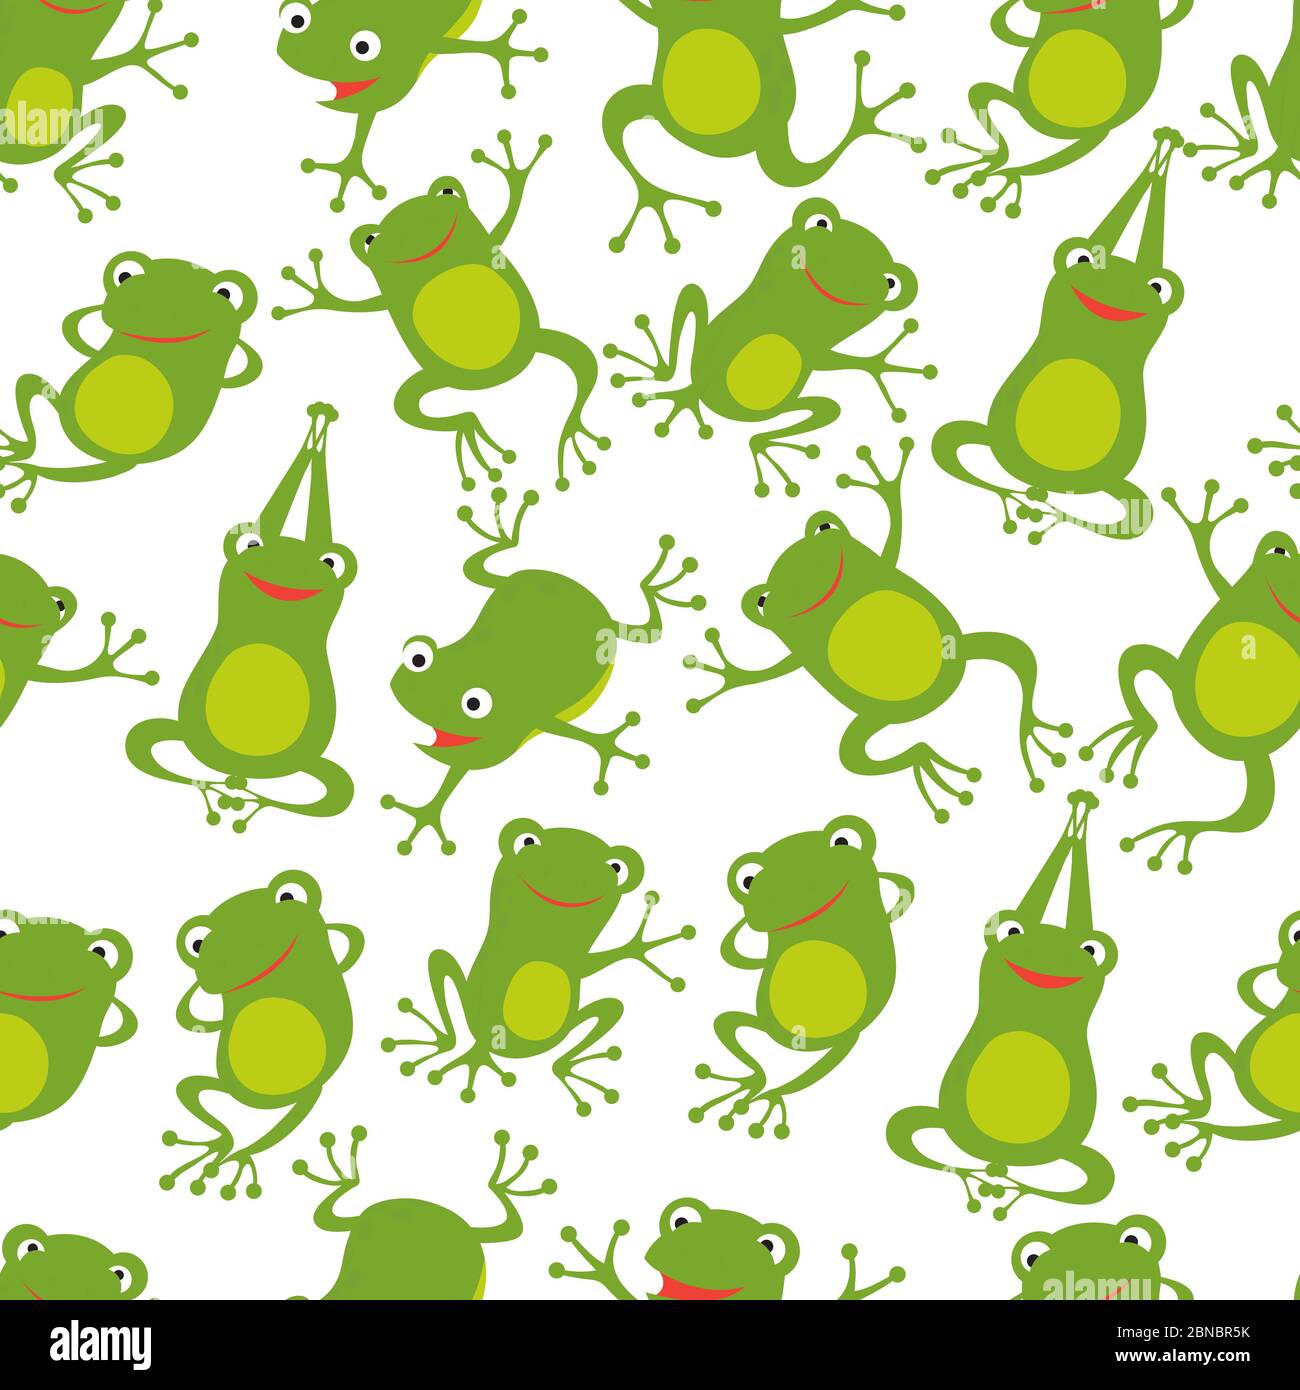 Cute Frog Wallpaper Desktop Discover more Amphibian Animal Anura Cute  Frog Frog wallpapers htt  Frog wallpaper Cute laptop wallpaper Cute  desktop wallpaper